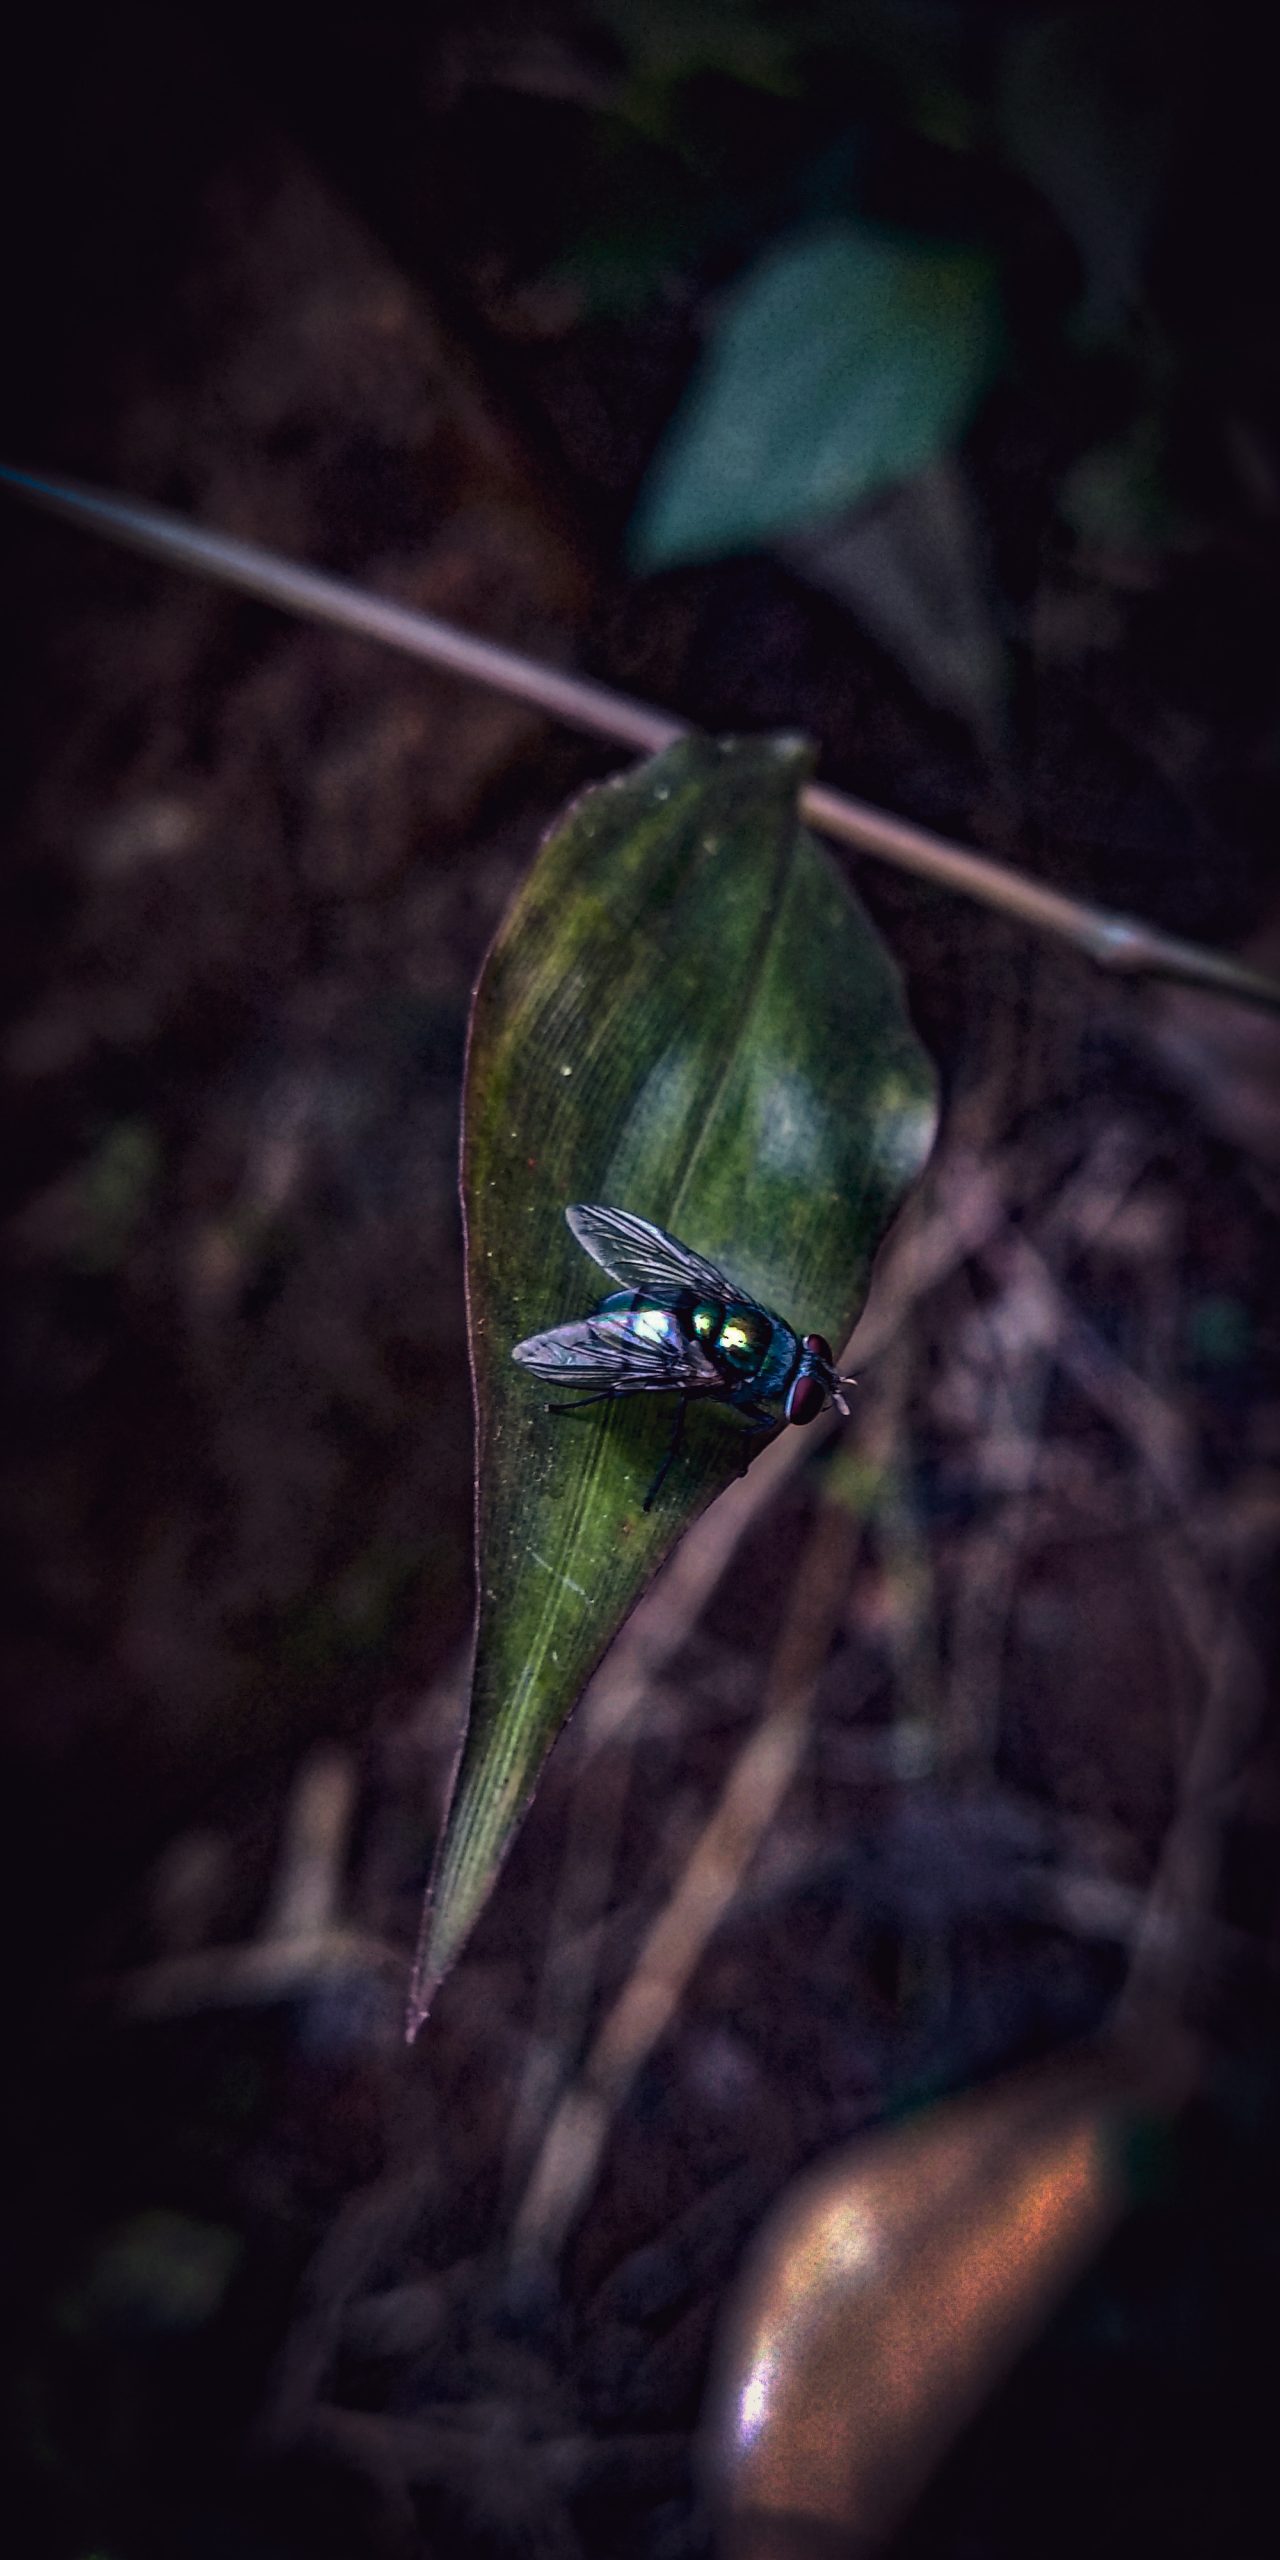 A fly on a leaf